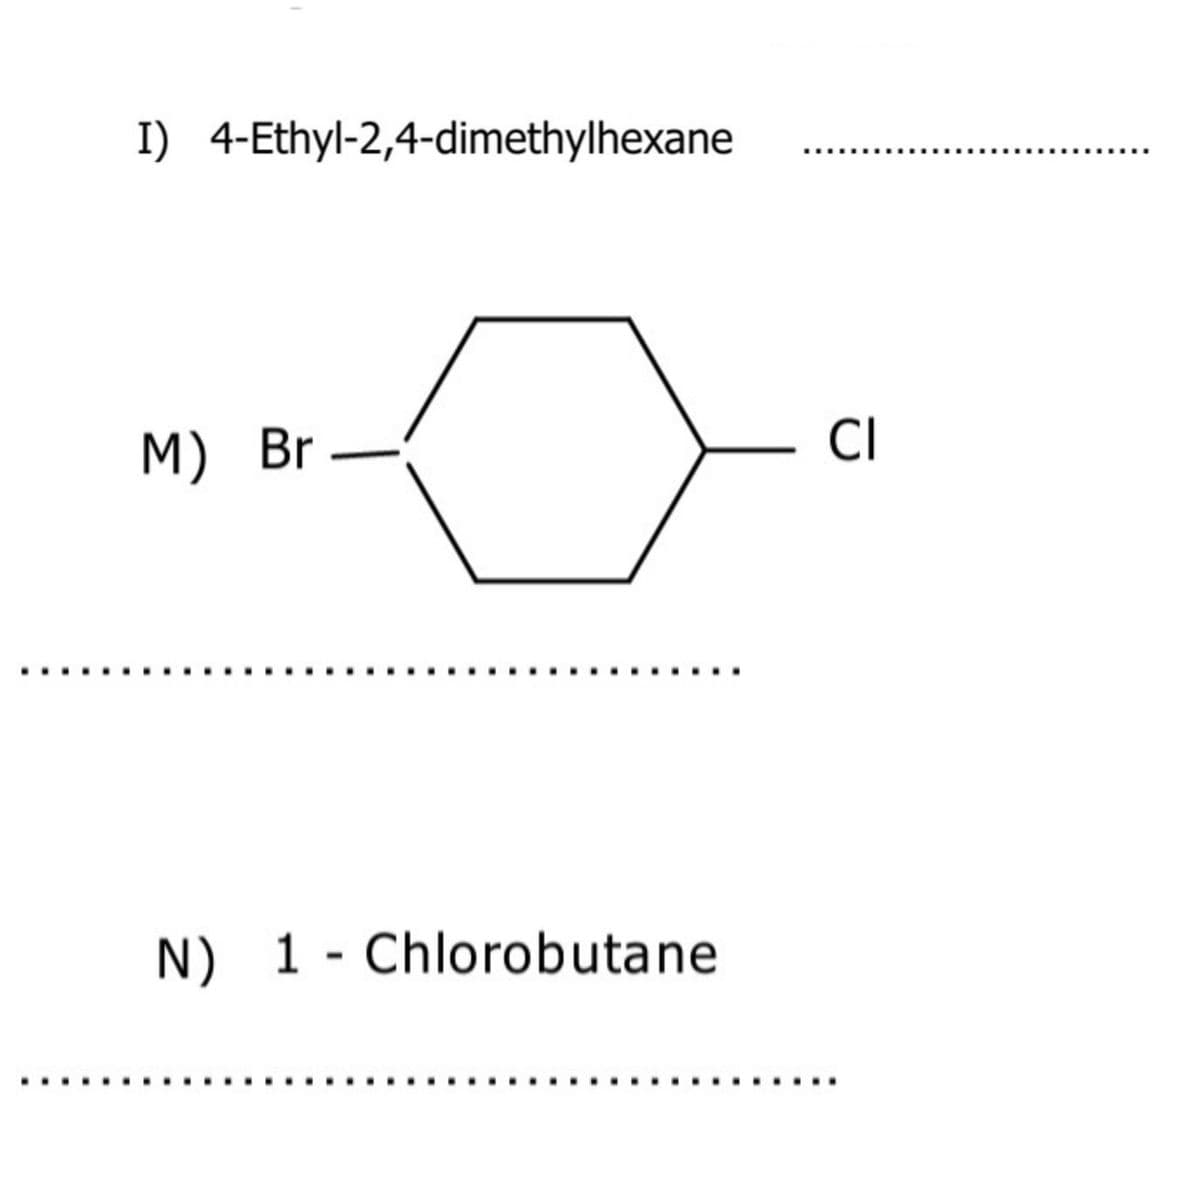 I) 4-Ethyl-2,4-dimethylhexane
M) Br –
CI
N) 1 - Chlorobutane
..
.
